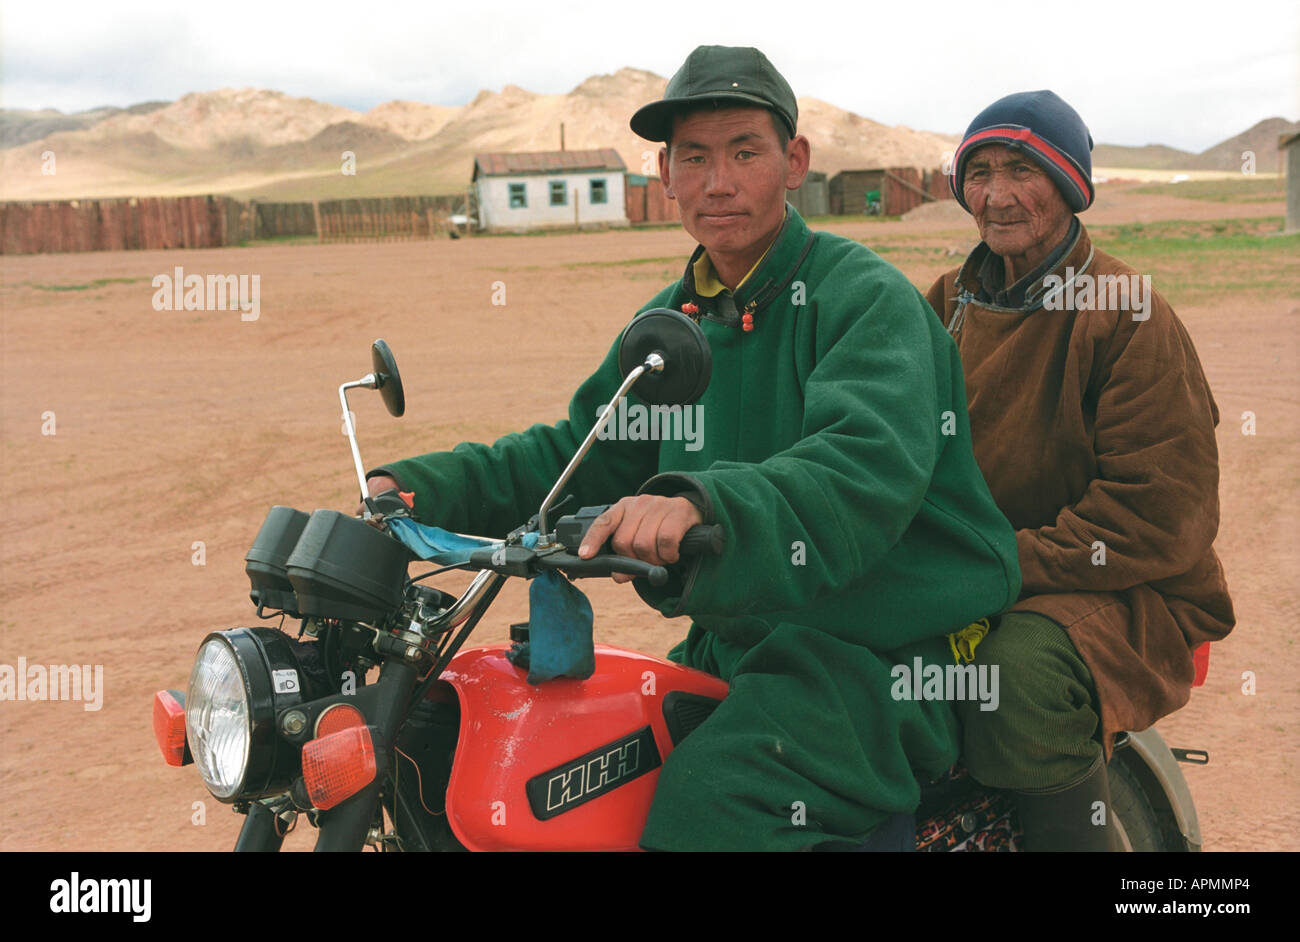 Men in national Mongolian clothes del on motorcycle. Numrug somon (village). Zavkhan aimag (province). Mongolia Stock Photo